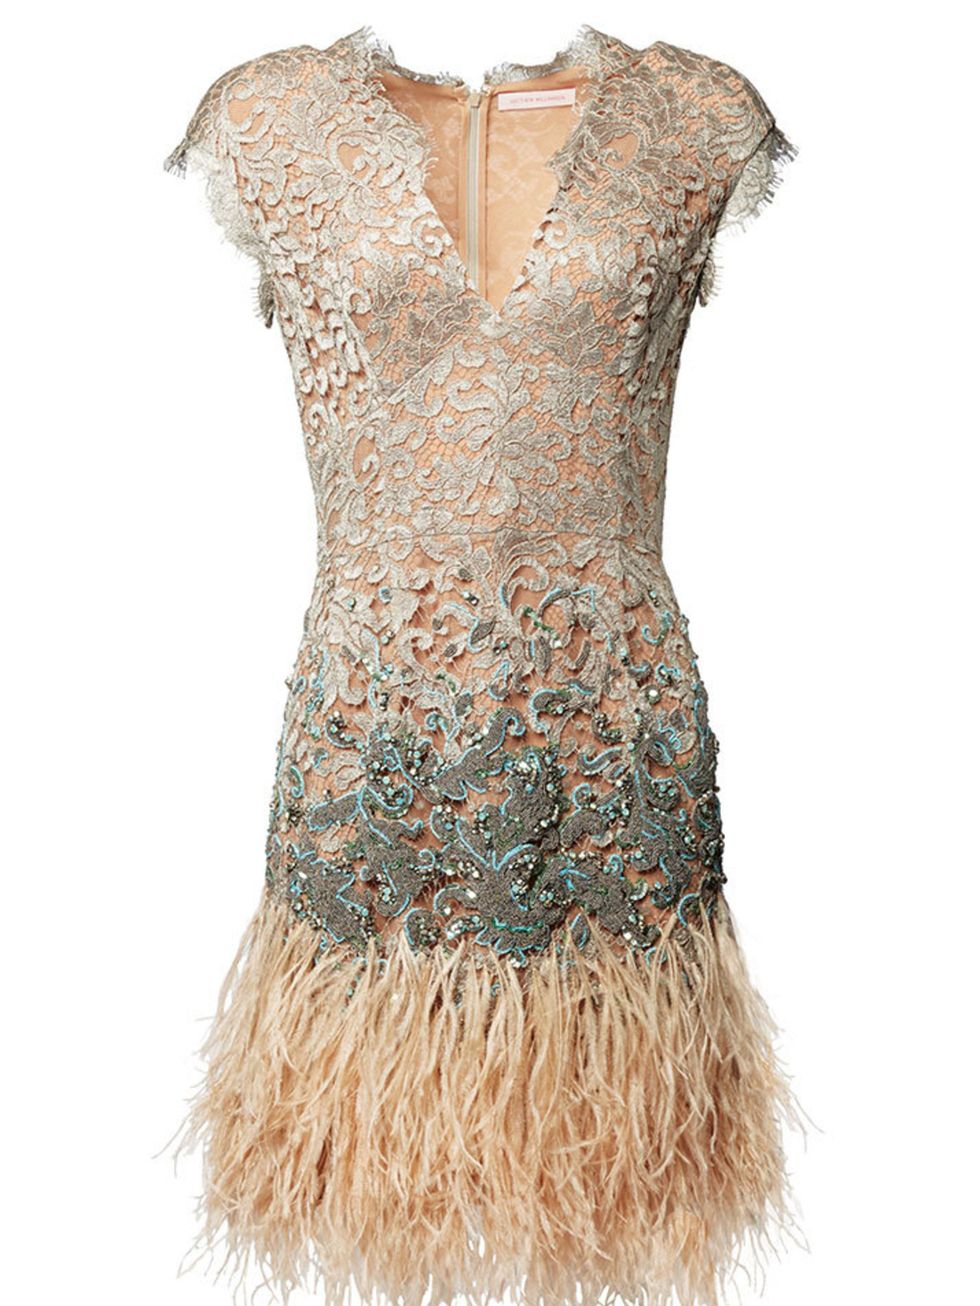 <p>Cream Lacquer Lace Feather Dress,</p>

<p><a href="http://www.matthewwilliamson.com/shop/product/9208/beige-winter-garden-couture-lace-dress">Buy online</a></p>